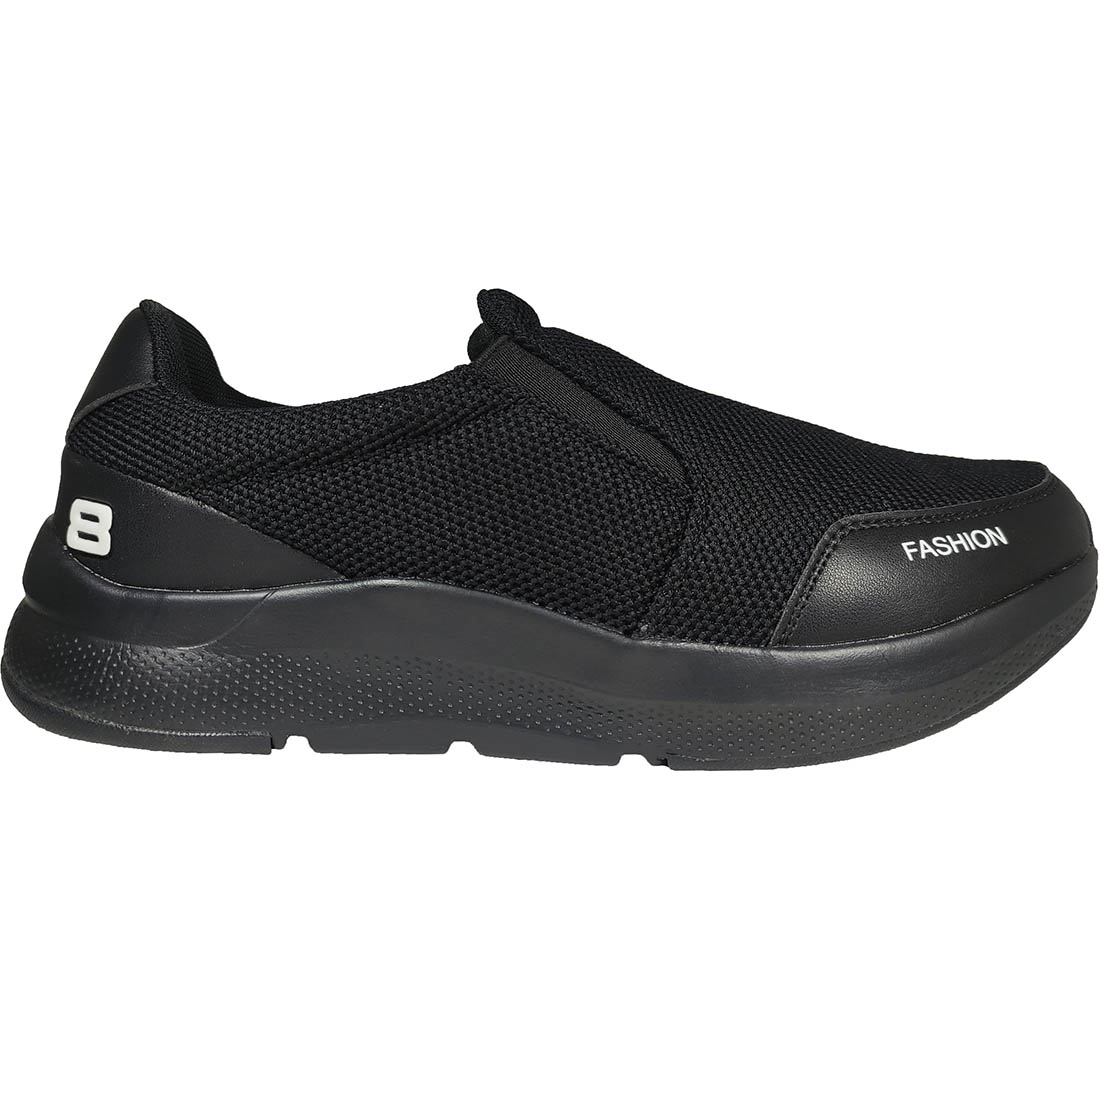 Sports shoes Fashion M23027 Black